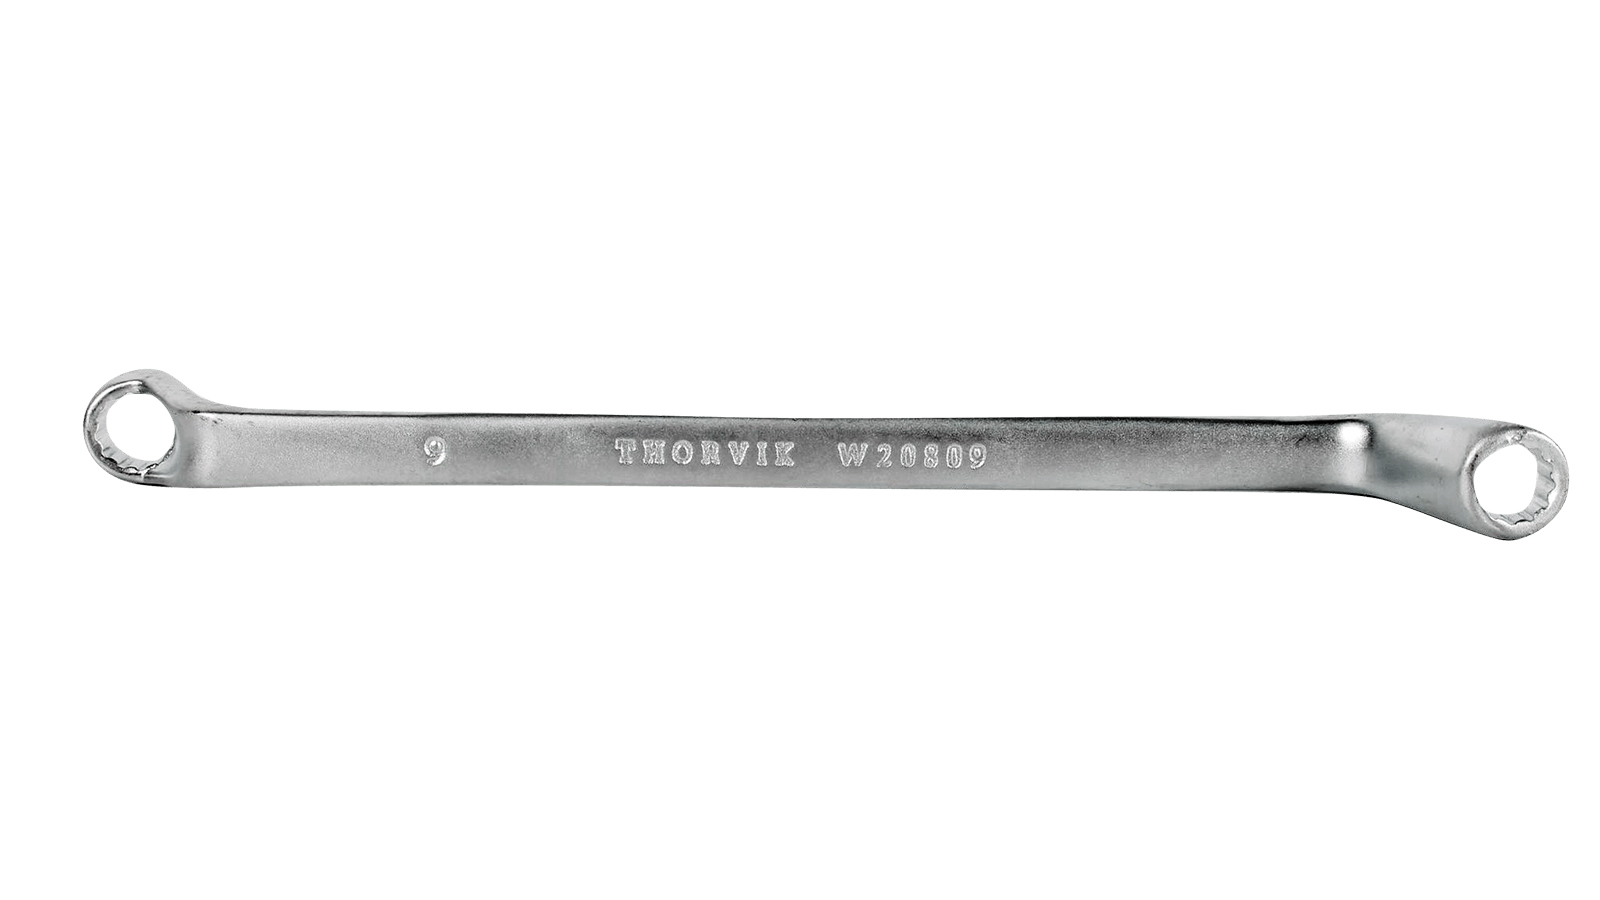 Ключ Накидной  8 Х 9 Thorvik Серии Arc THORVIK арт. W20809 разводной ключ thorvik